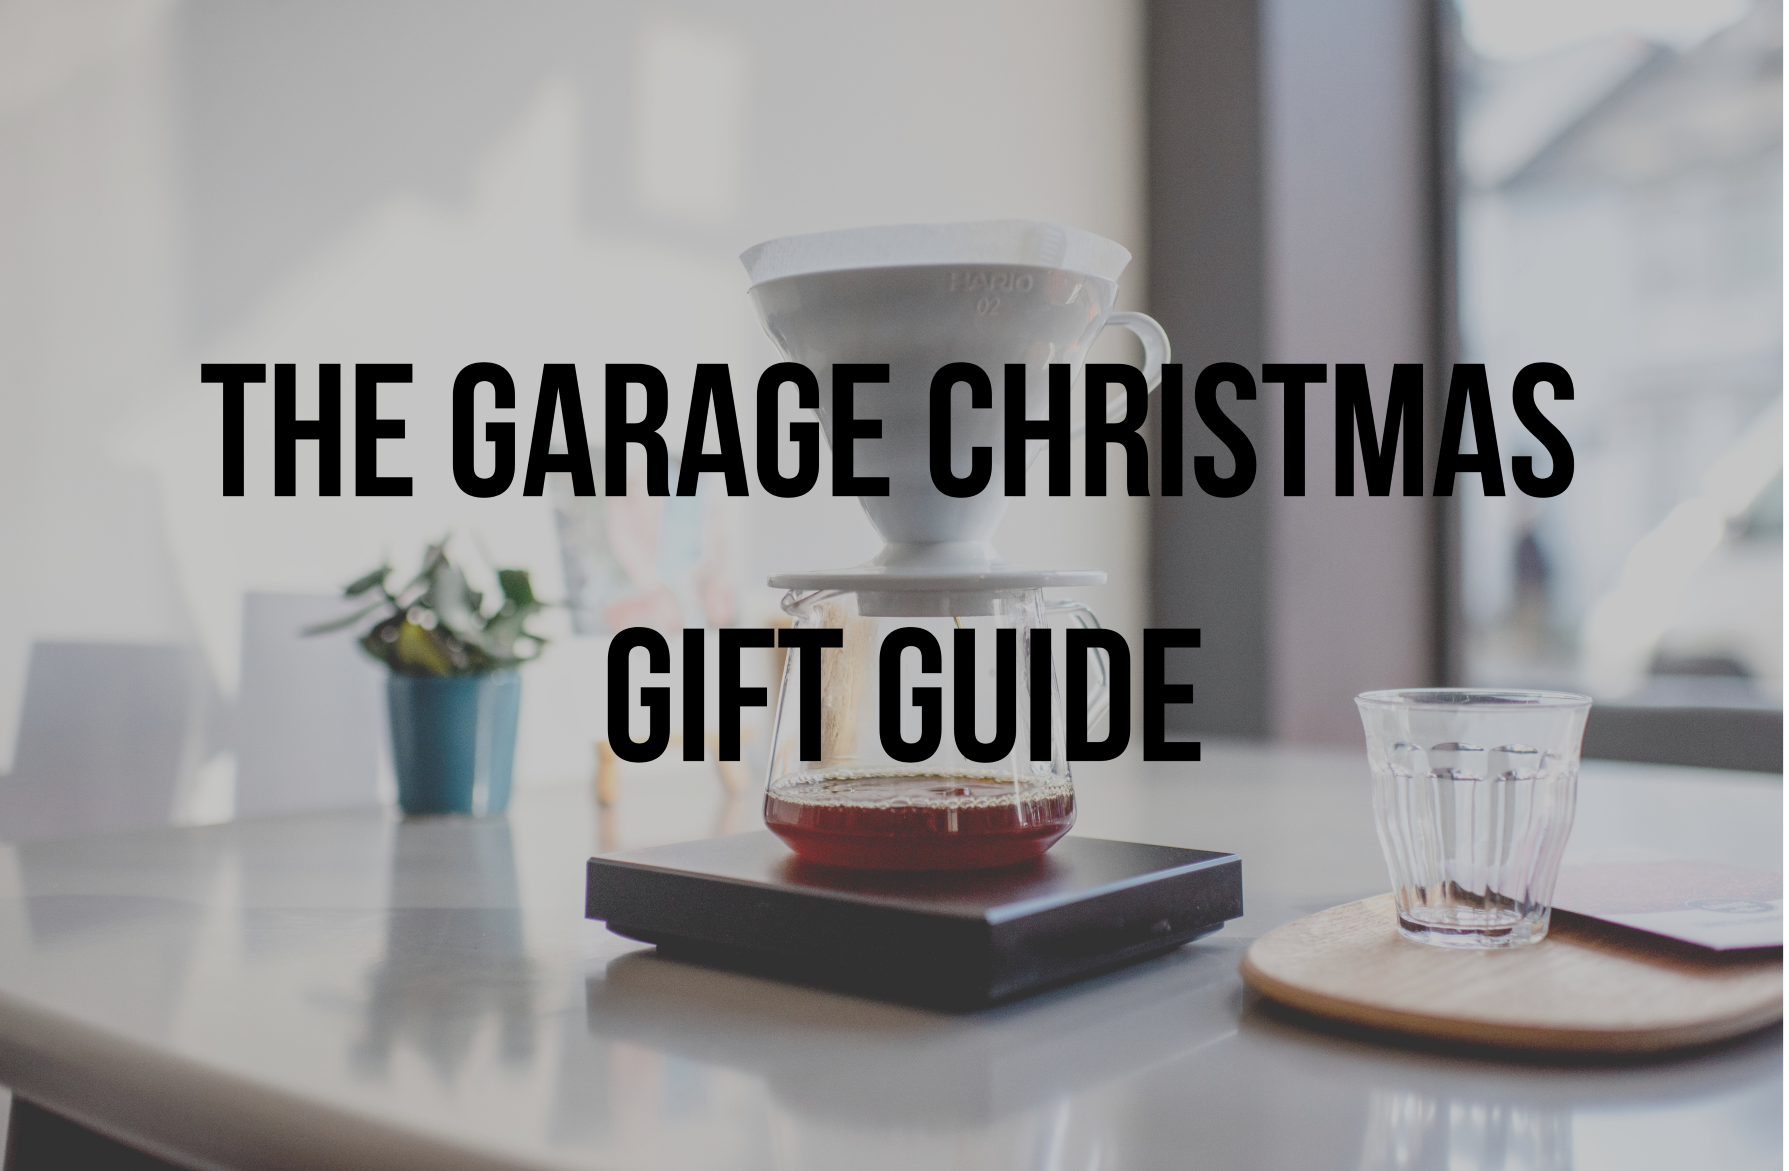 Make it a Very Garage Christmas!